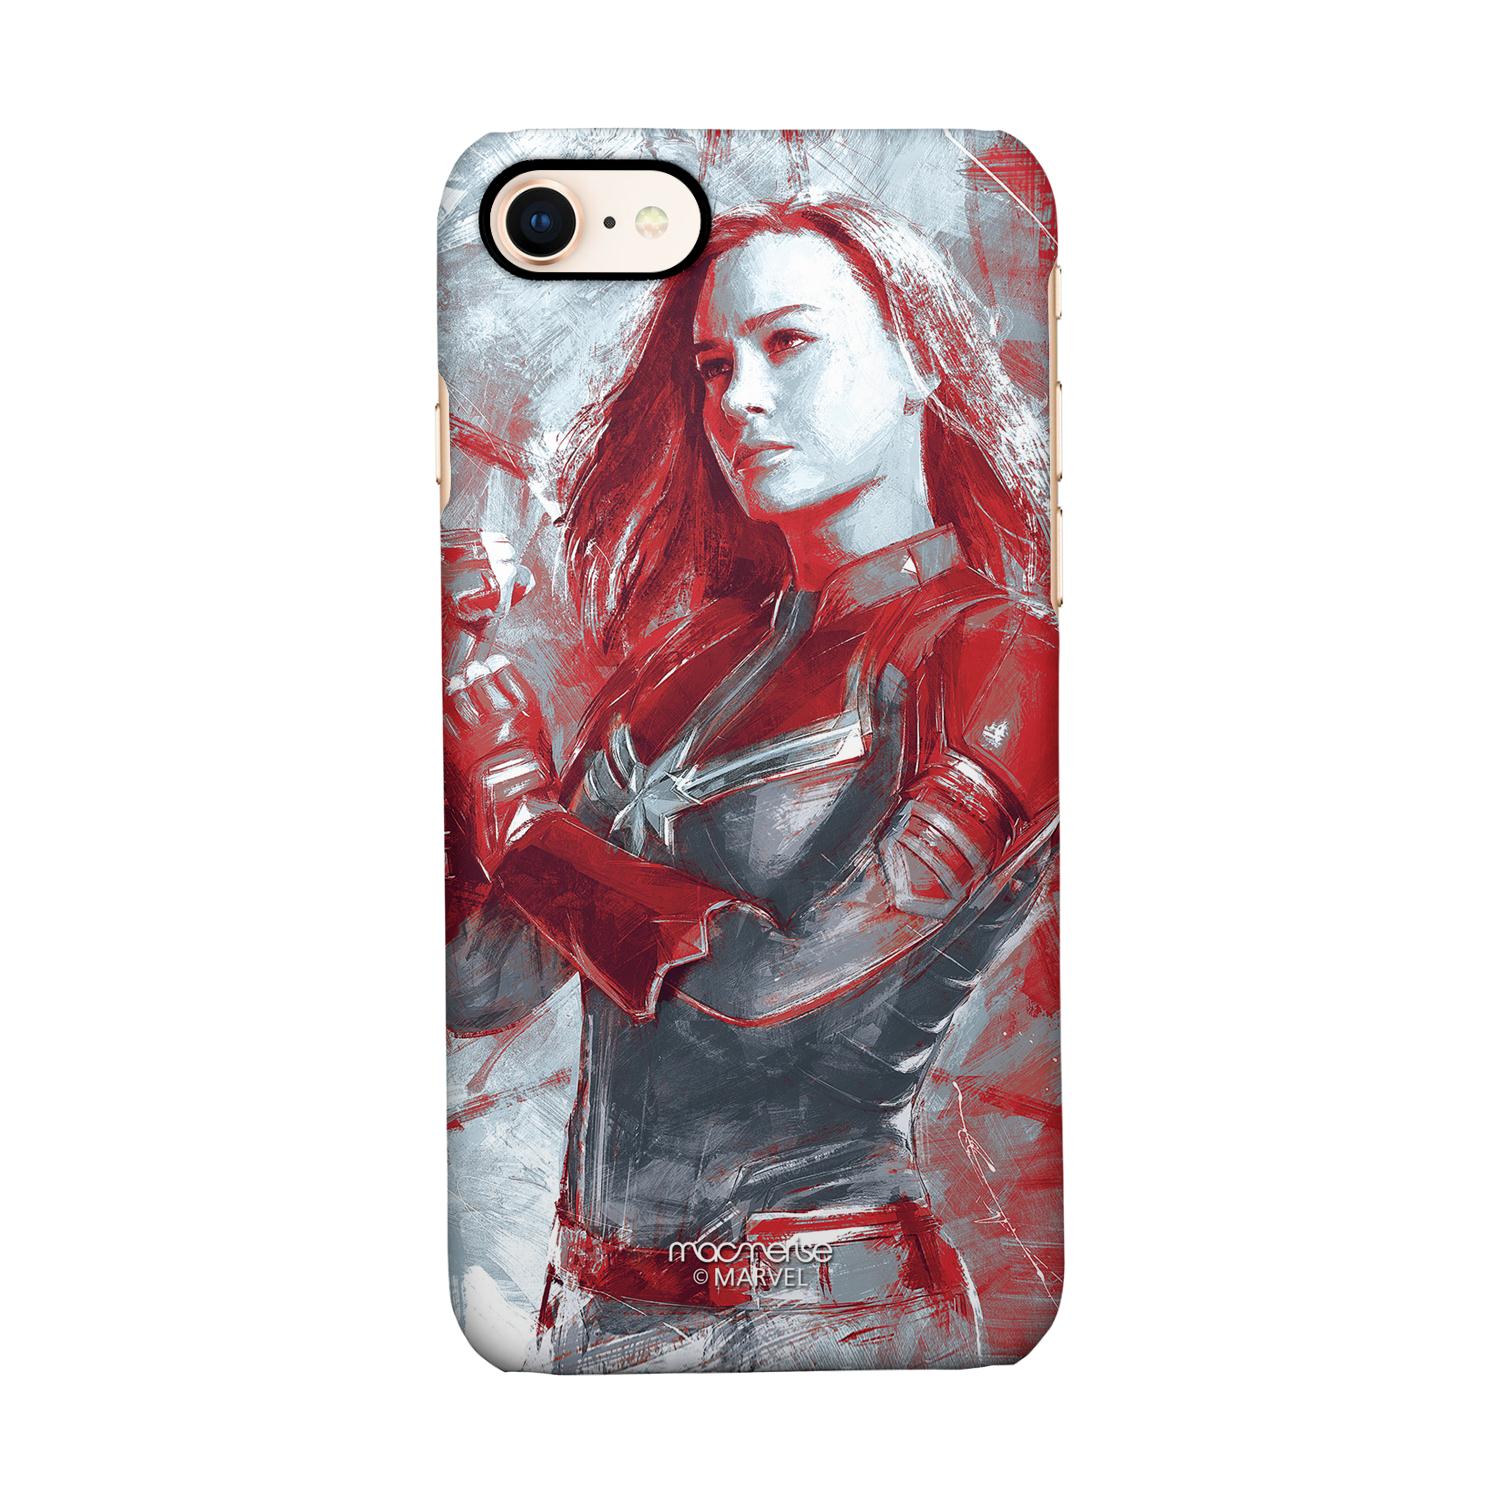 Buy Charcoal Art Capt Marvel - Sleek Phone Case for iPhone 7 Online